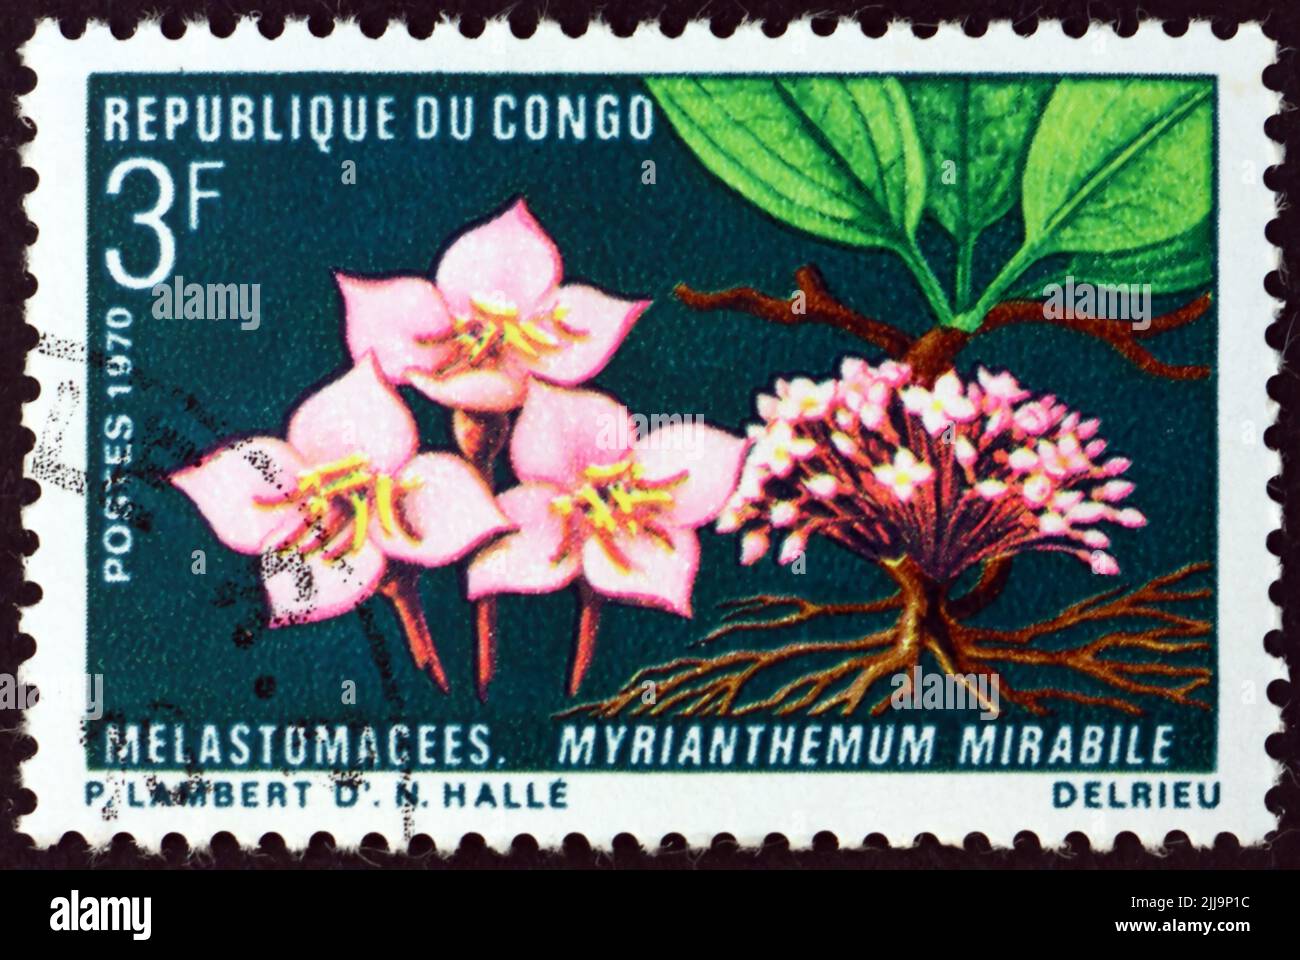 CONGO - CIRCA 1970: a stamp printed in Congo shows myrianthemum mirabile, flowering plant, circa 1970 Stock Photo